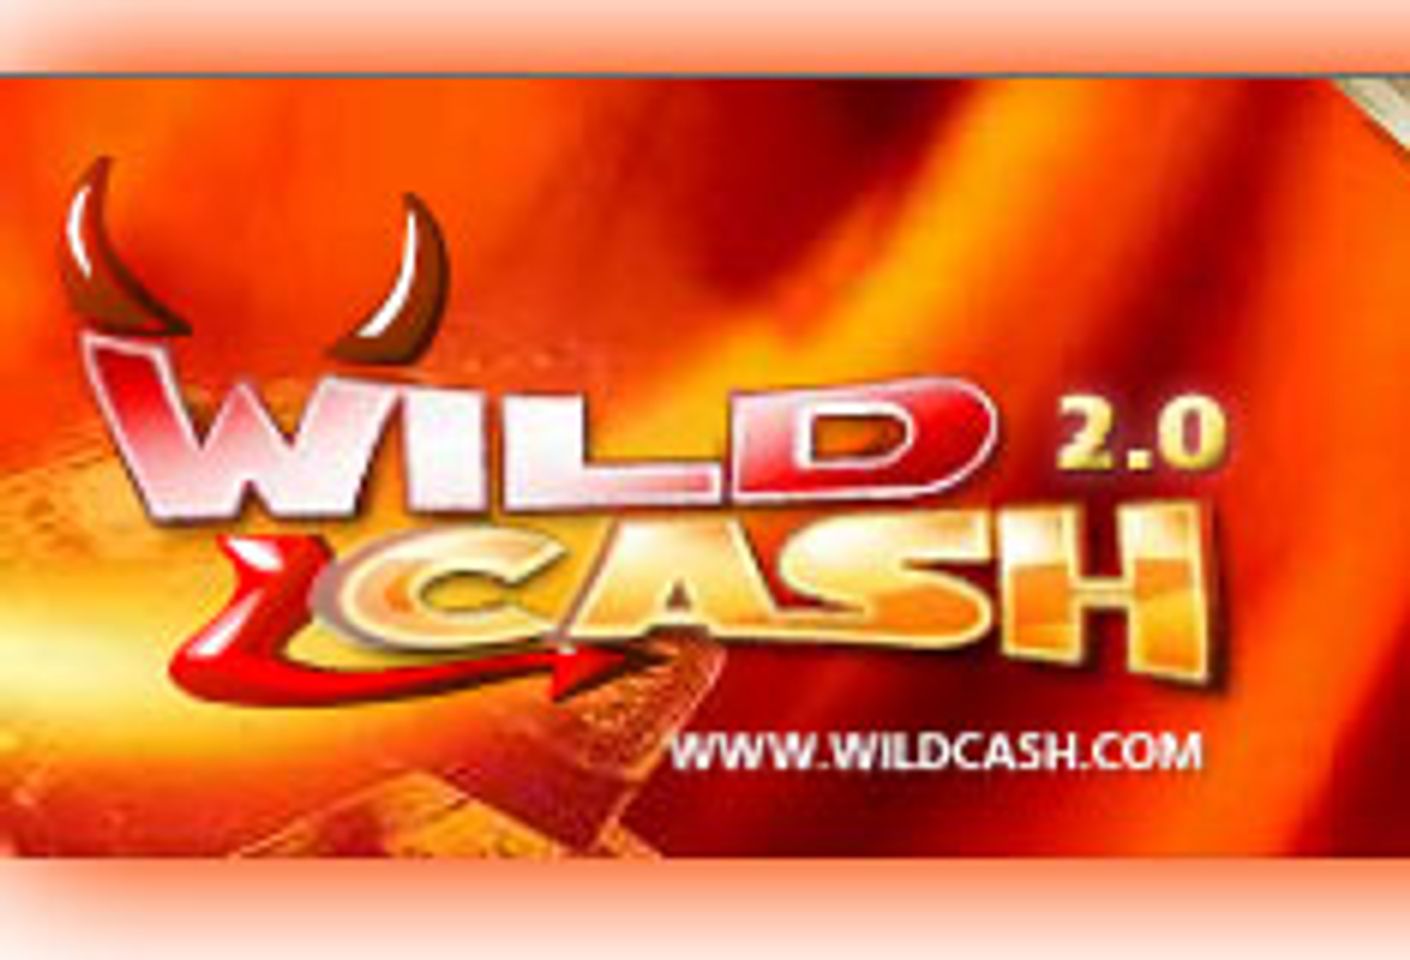 WildCash Launches New Sites